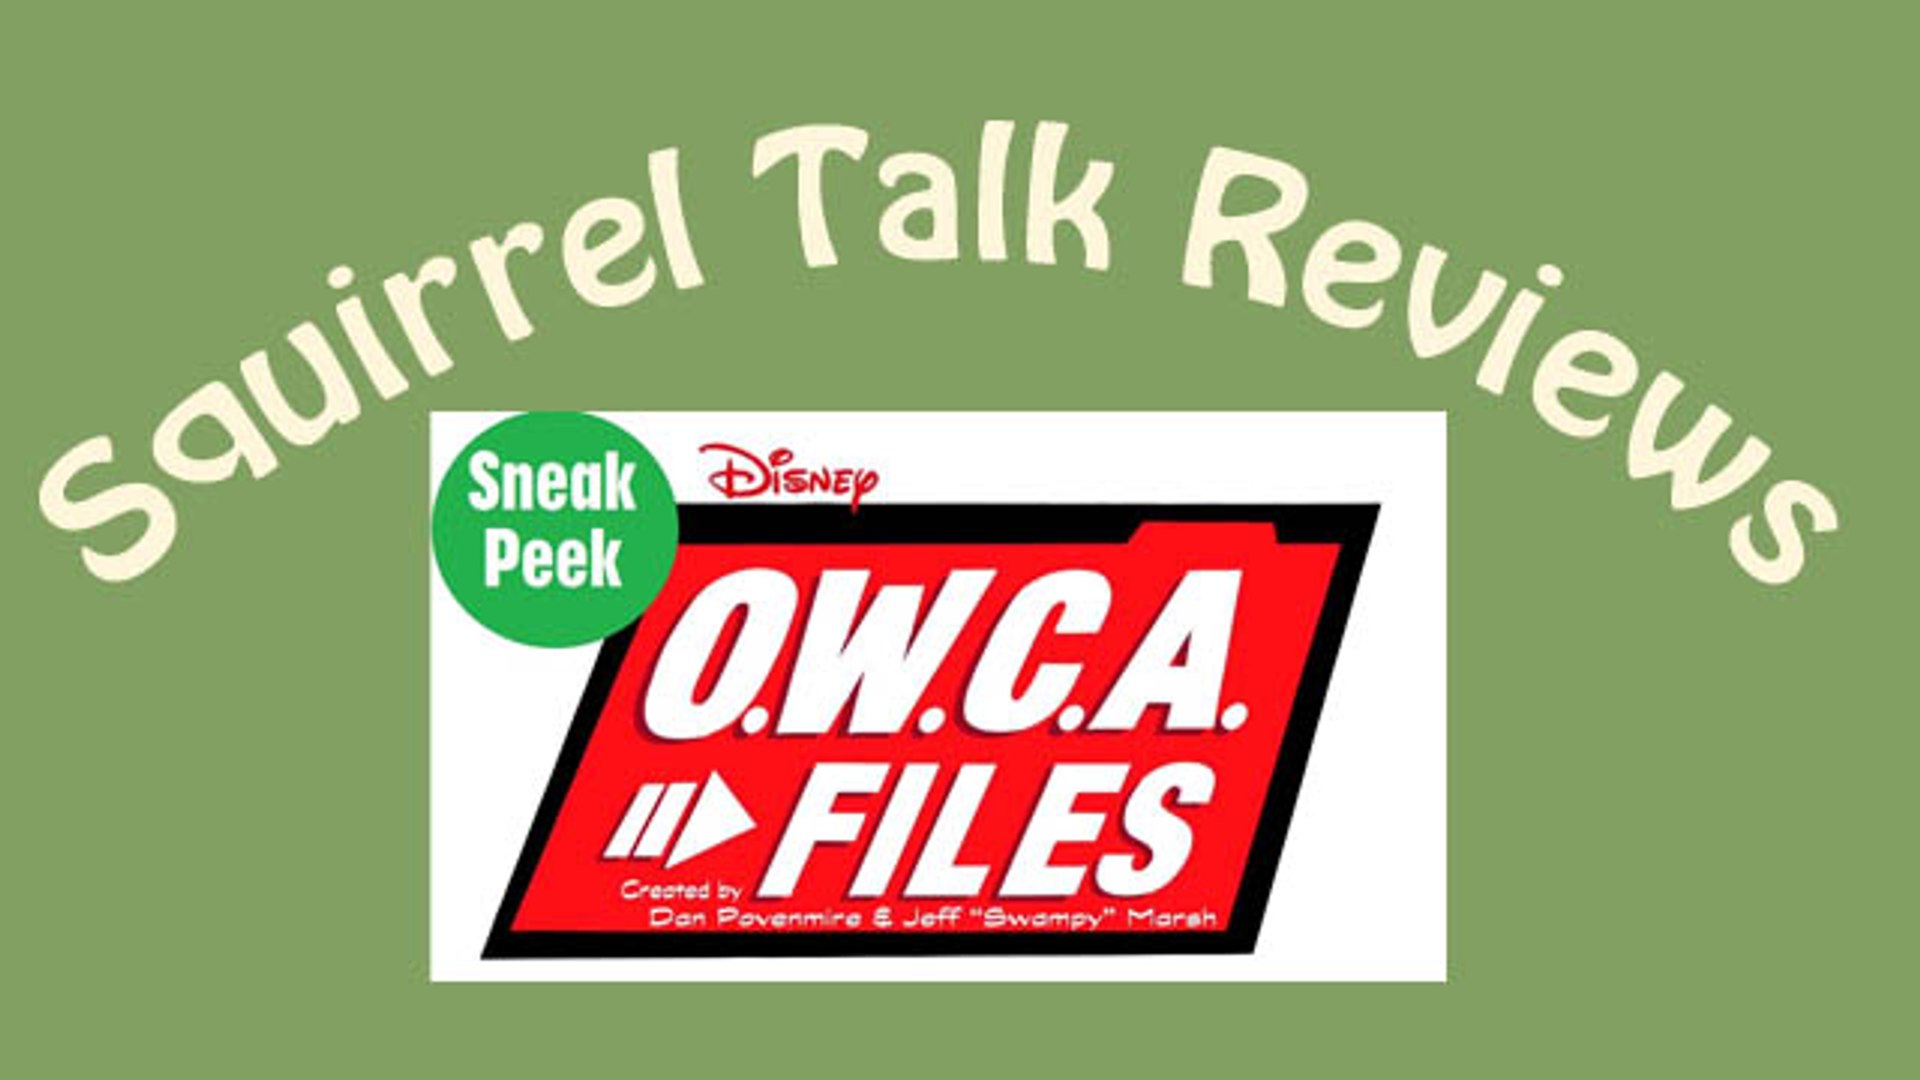 Squirrel Talk Review OWCA Files